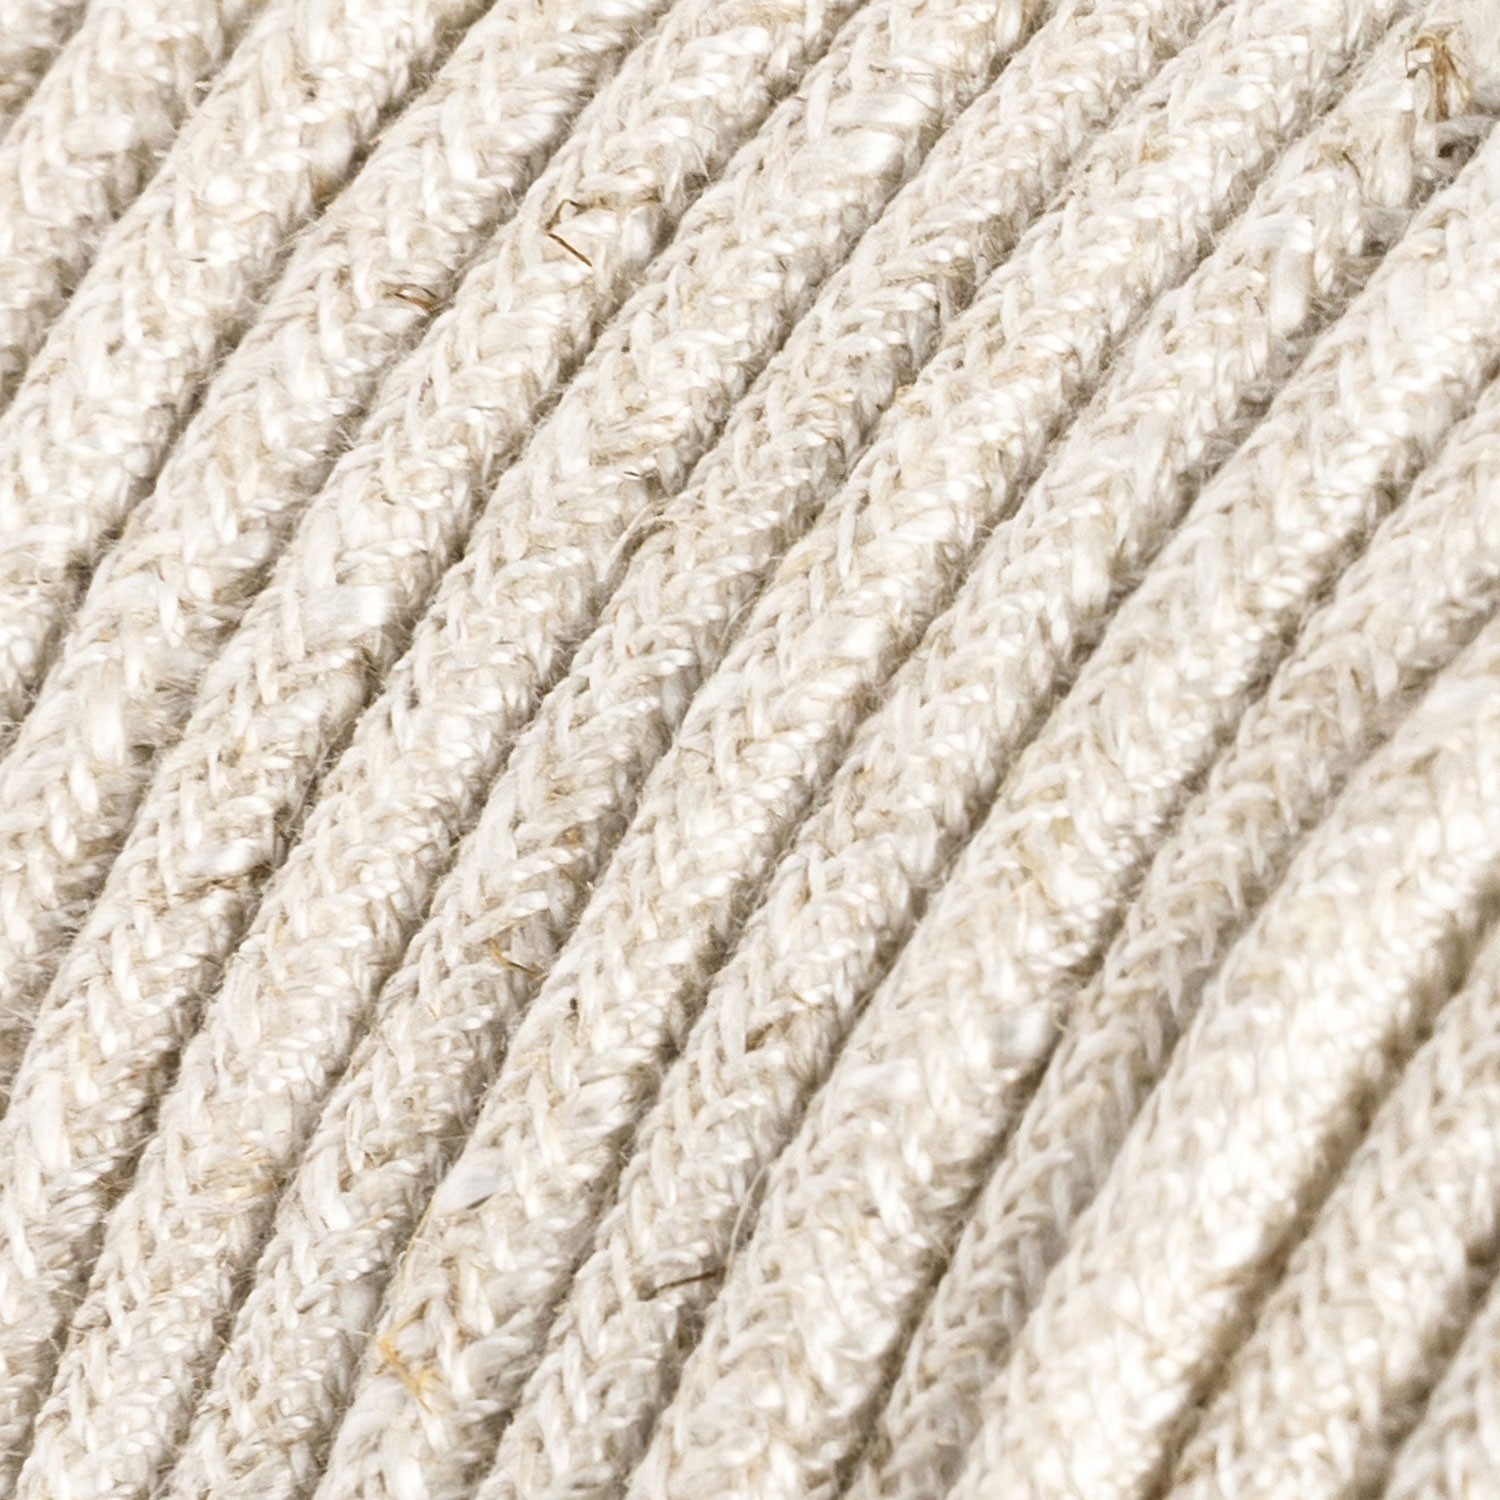 Linen White Melange Textile Cable - The Original Creative-Cables - RN01 round 2x0.75mm / 3x0.75mm